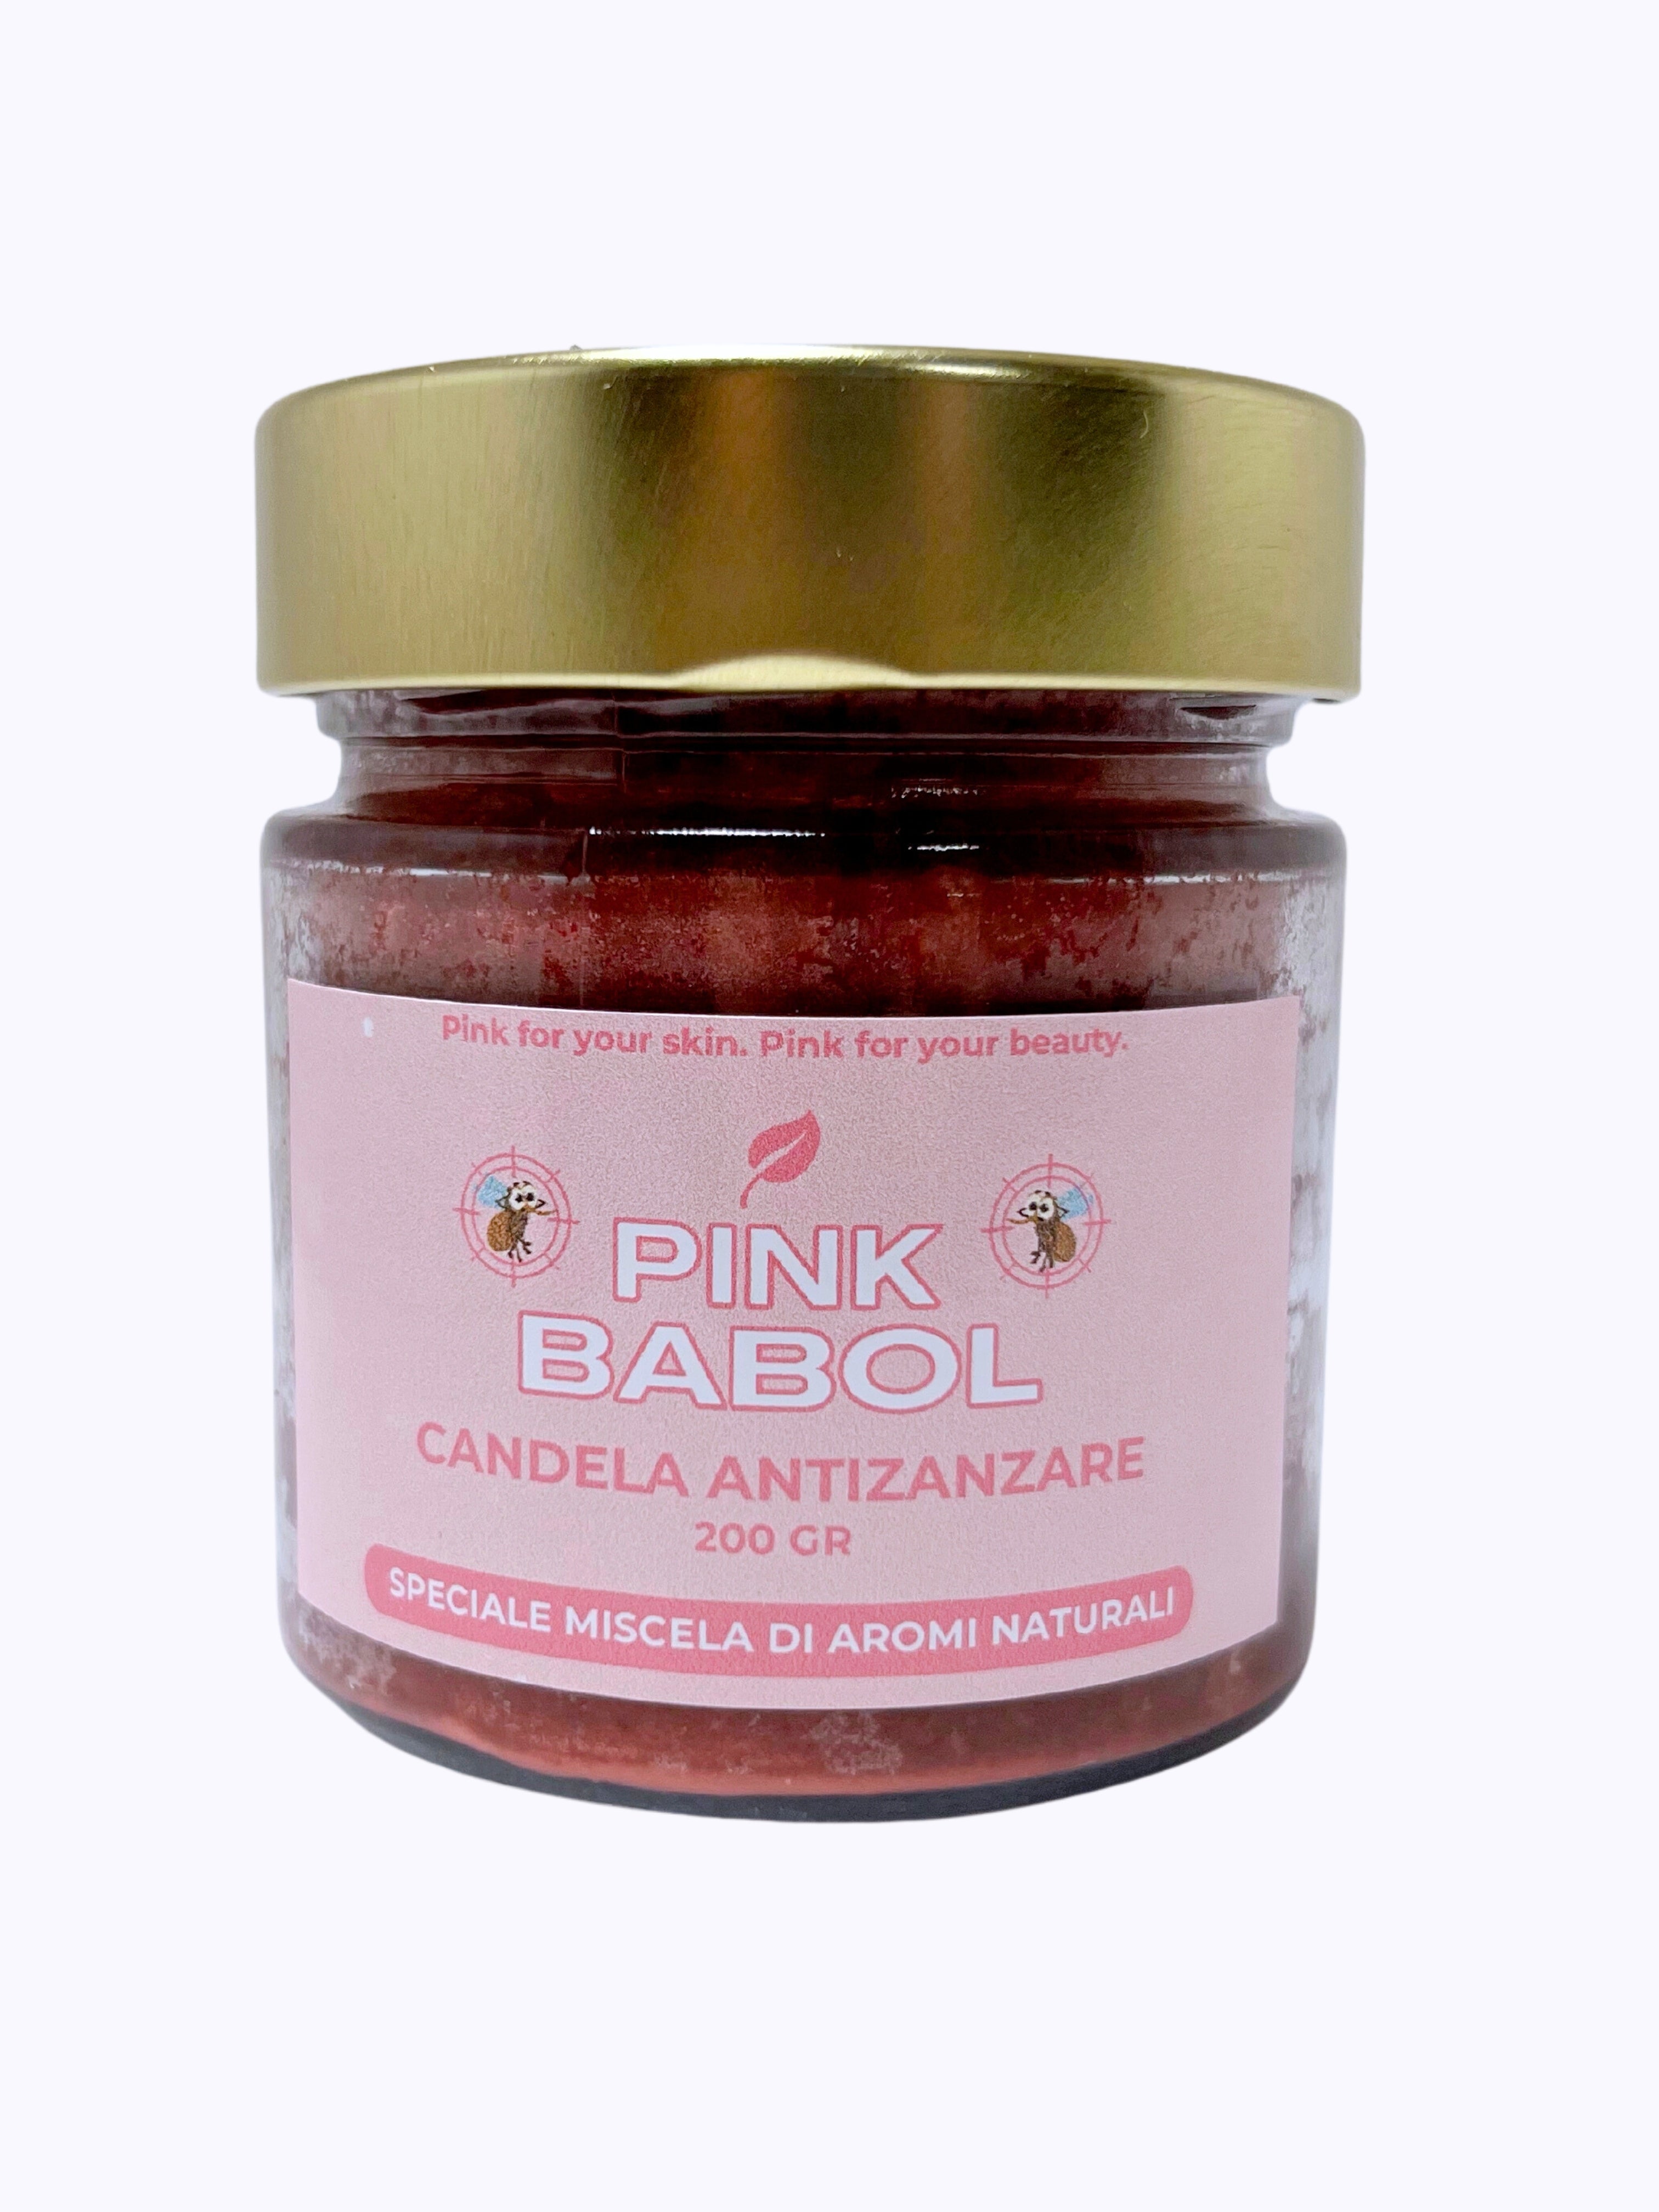 Candela anti zanzare - Speciale miscela di aromi naturali-Pink Babol